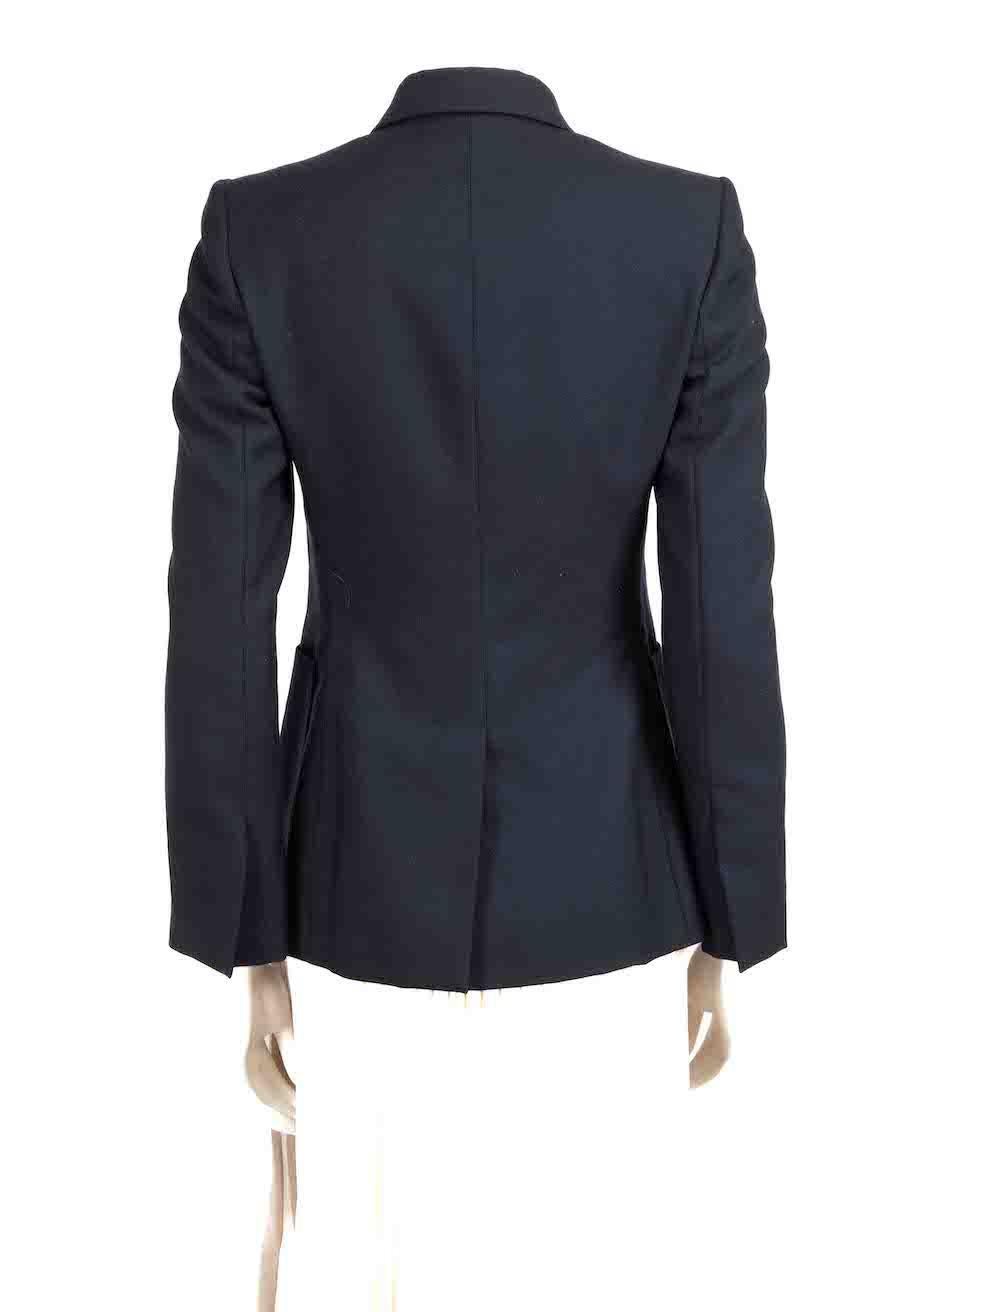 Stella McCartney Navy Wool Single Breast Blazer Size S In Good Condition For Sale In London, GB